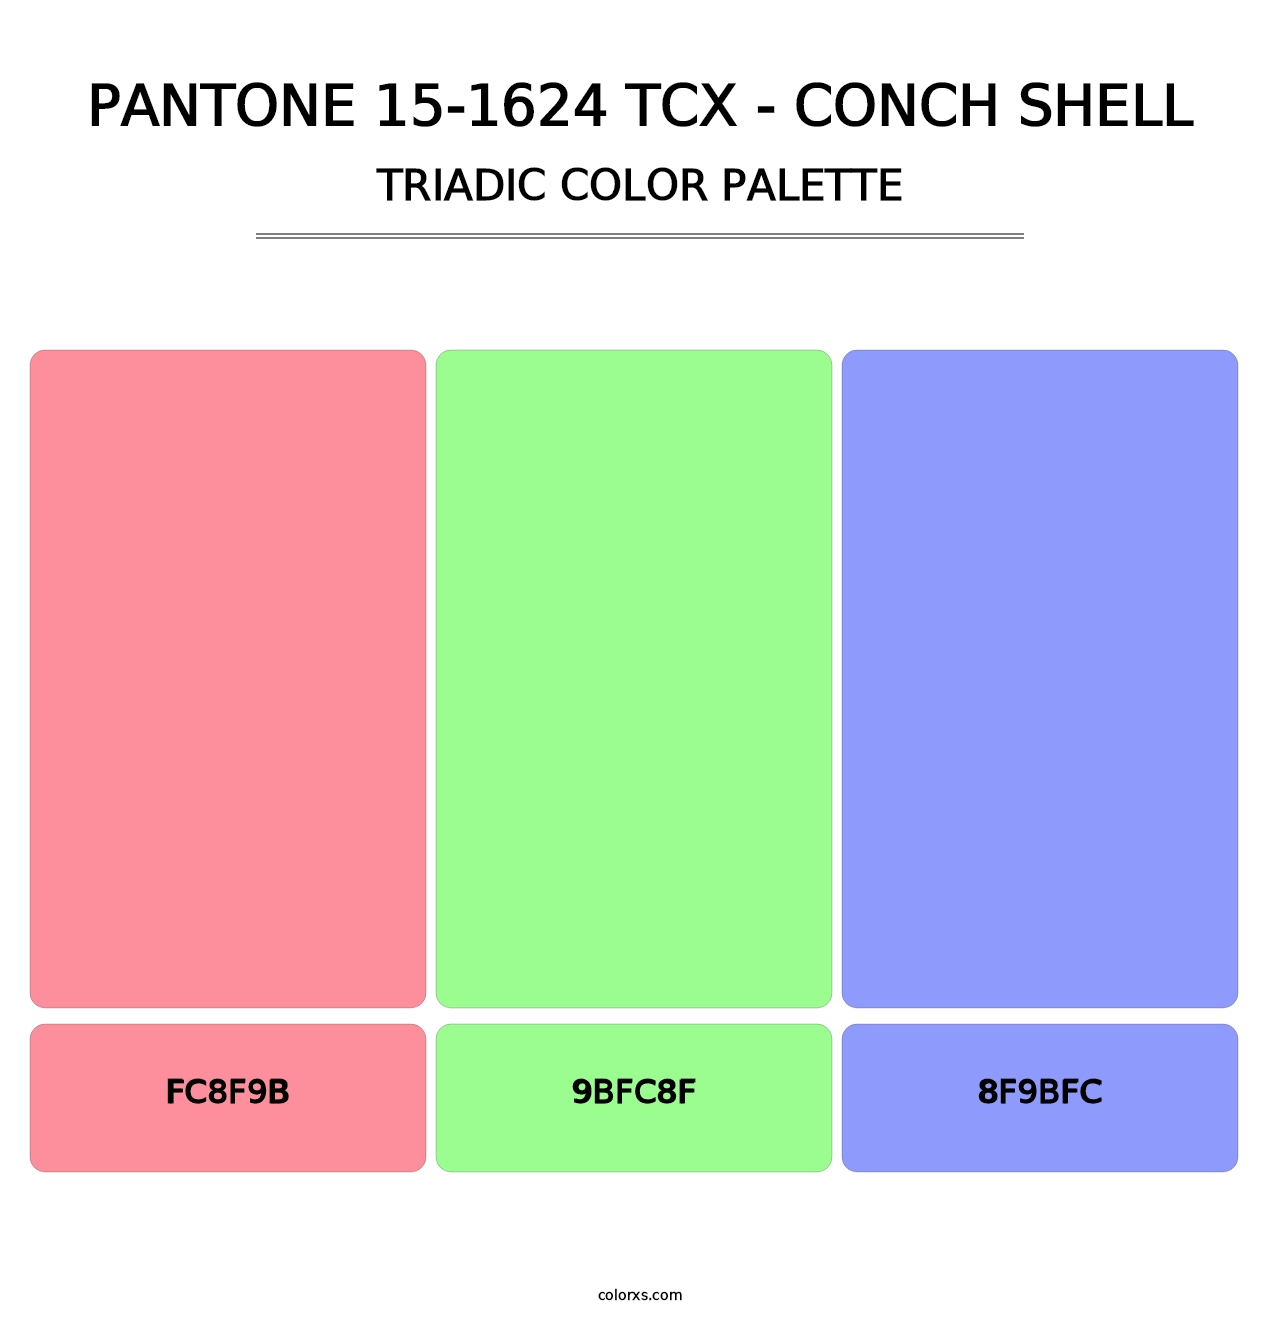 PANTONE 15-1624 TCX - Conch Shell - Triadic Color Palette